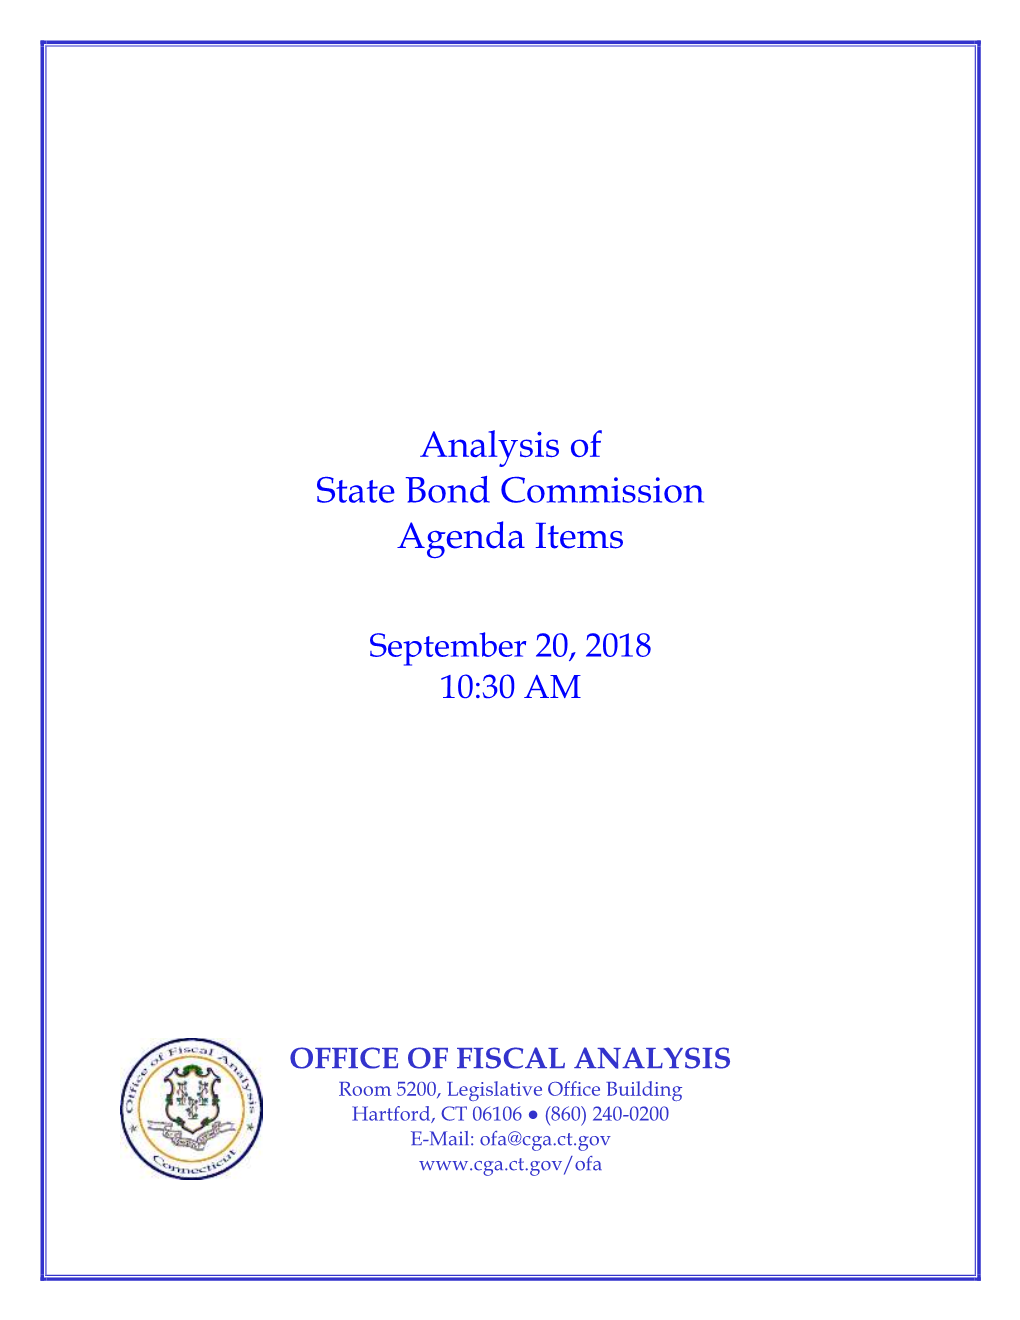 Analysis of State Bond Commission Agenda Items